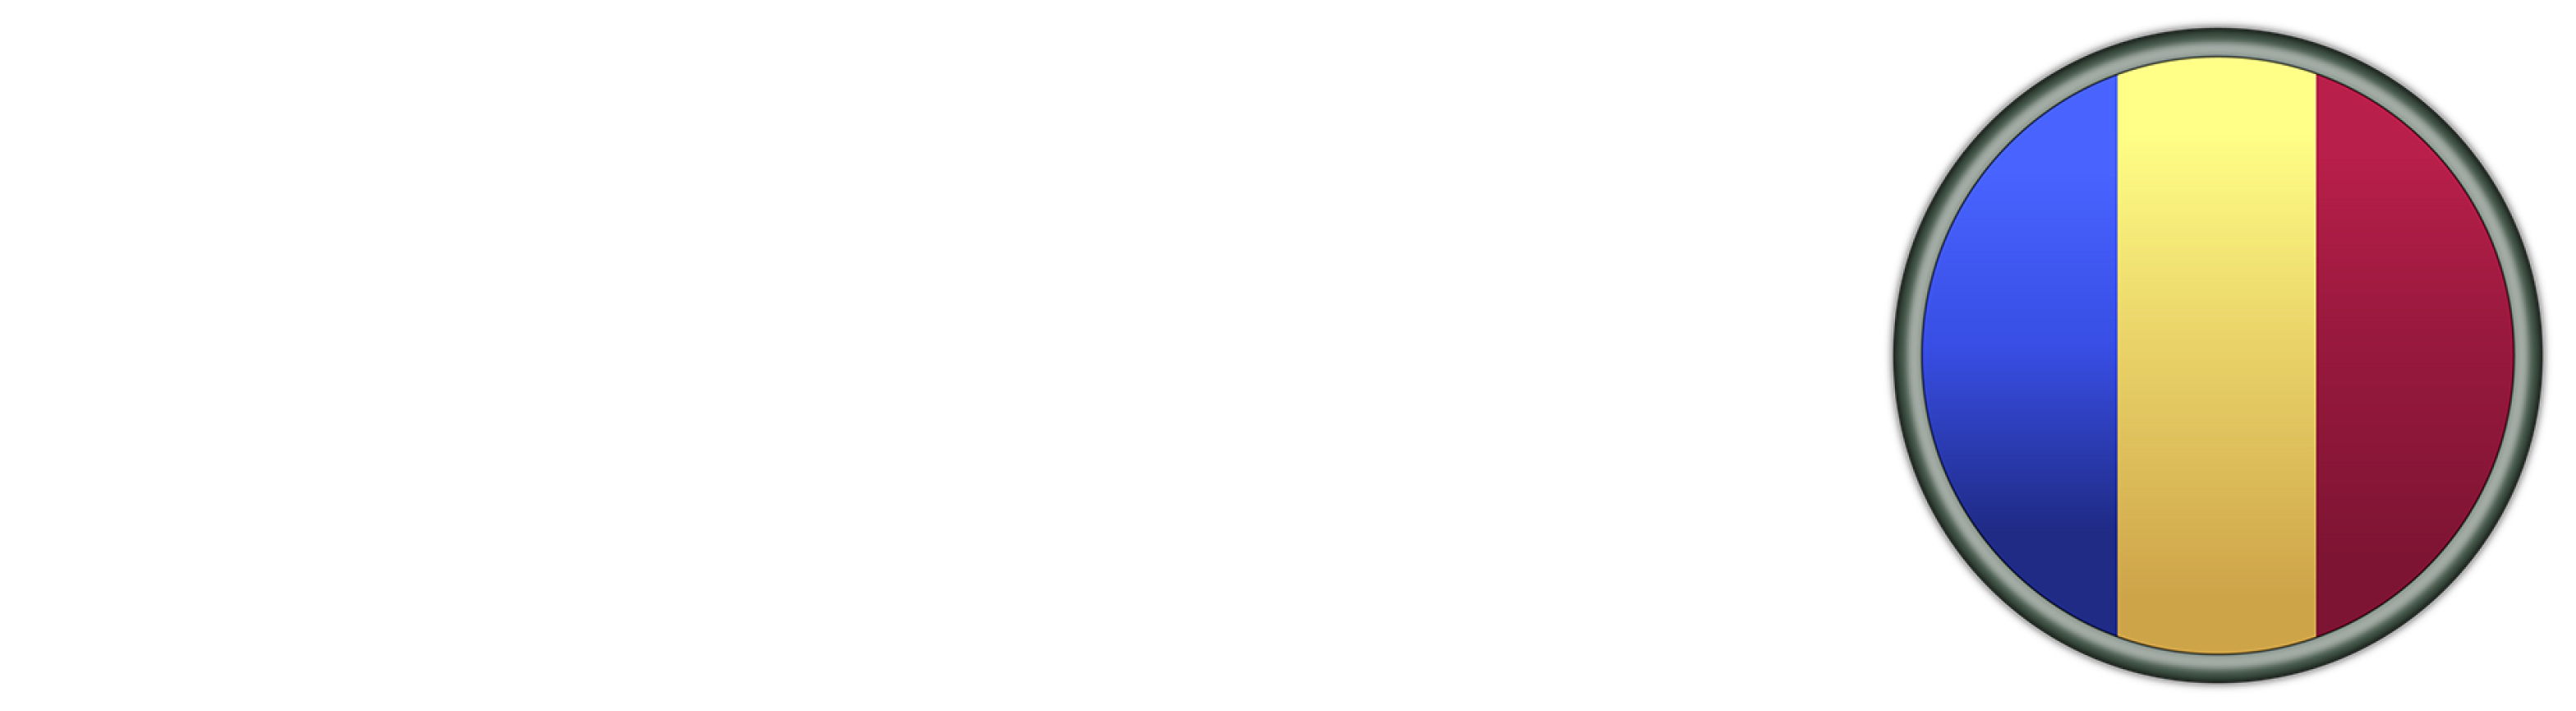 TRADOC G2 Logo